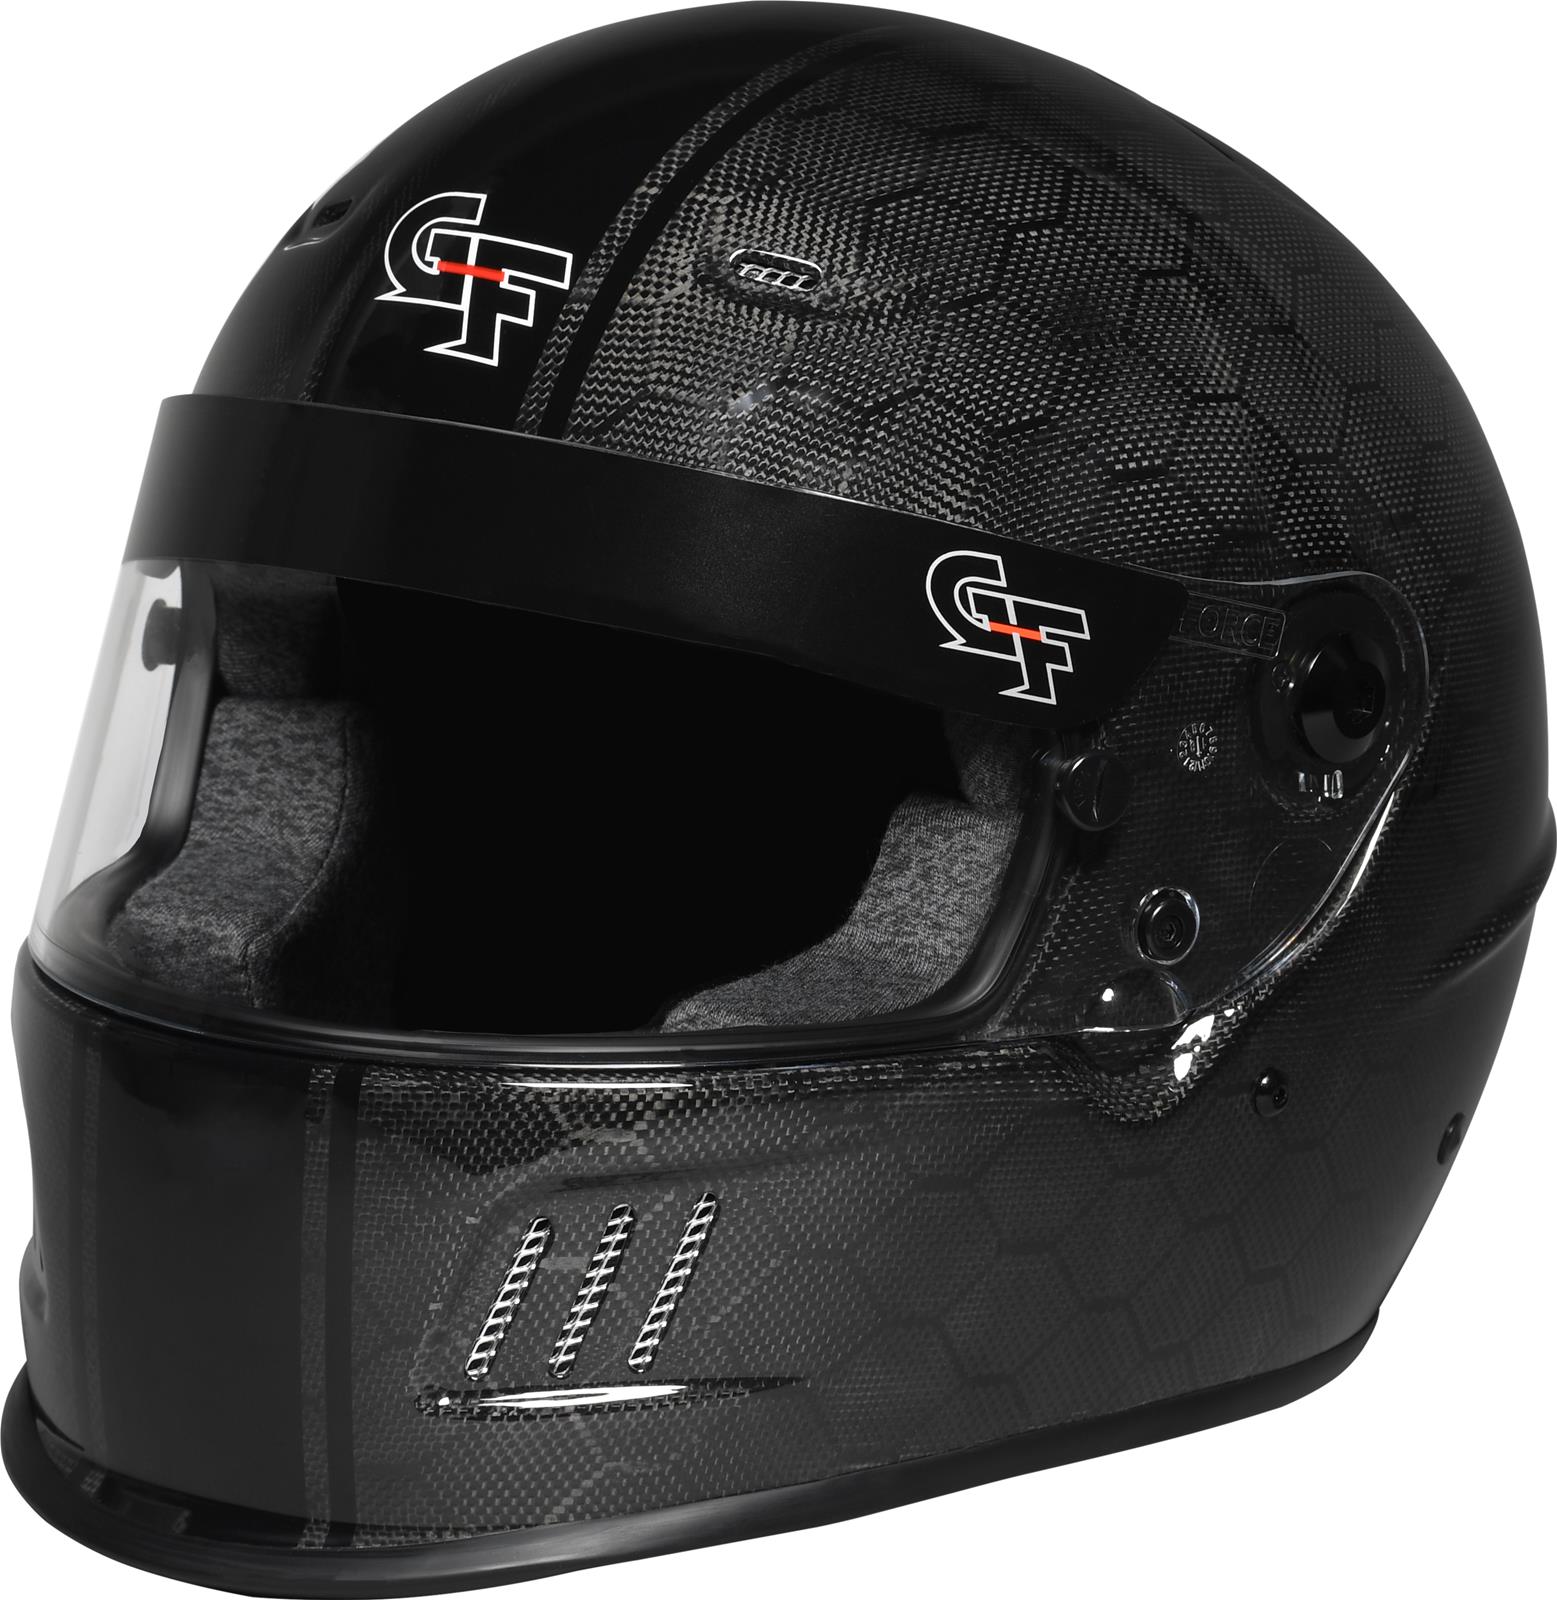 G Force Racing 3123 Large White GF 3 Full Face Helmet Snell SA-2015 